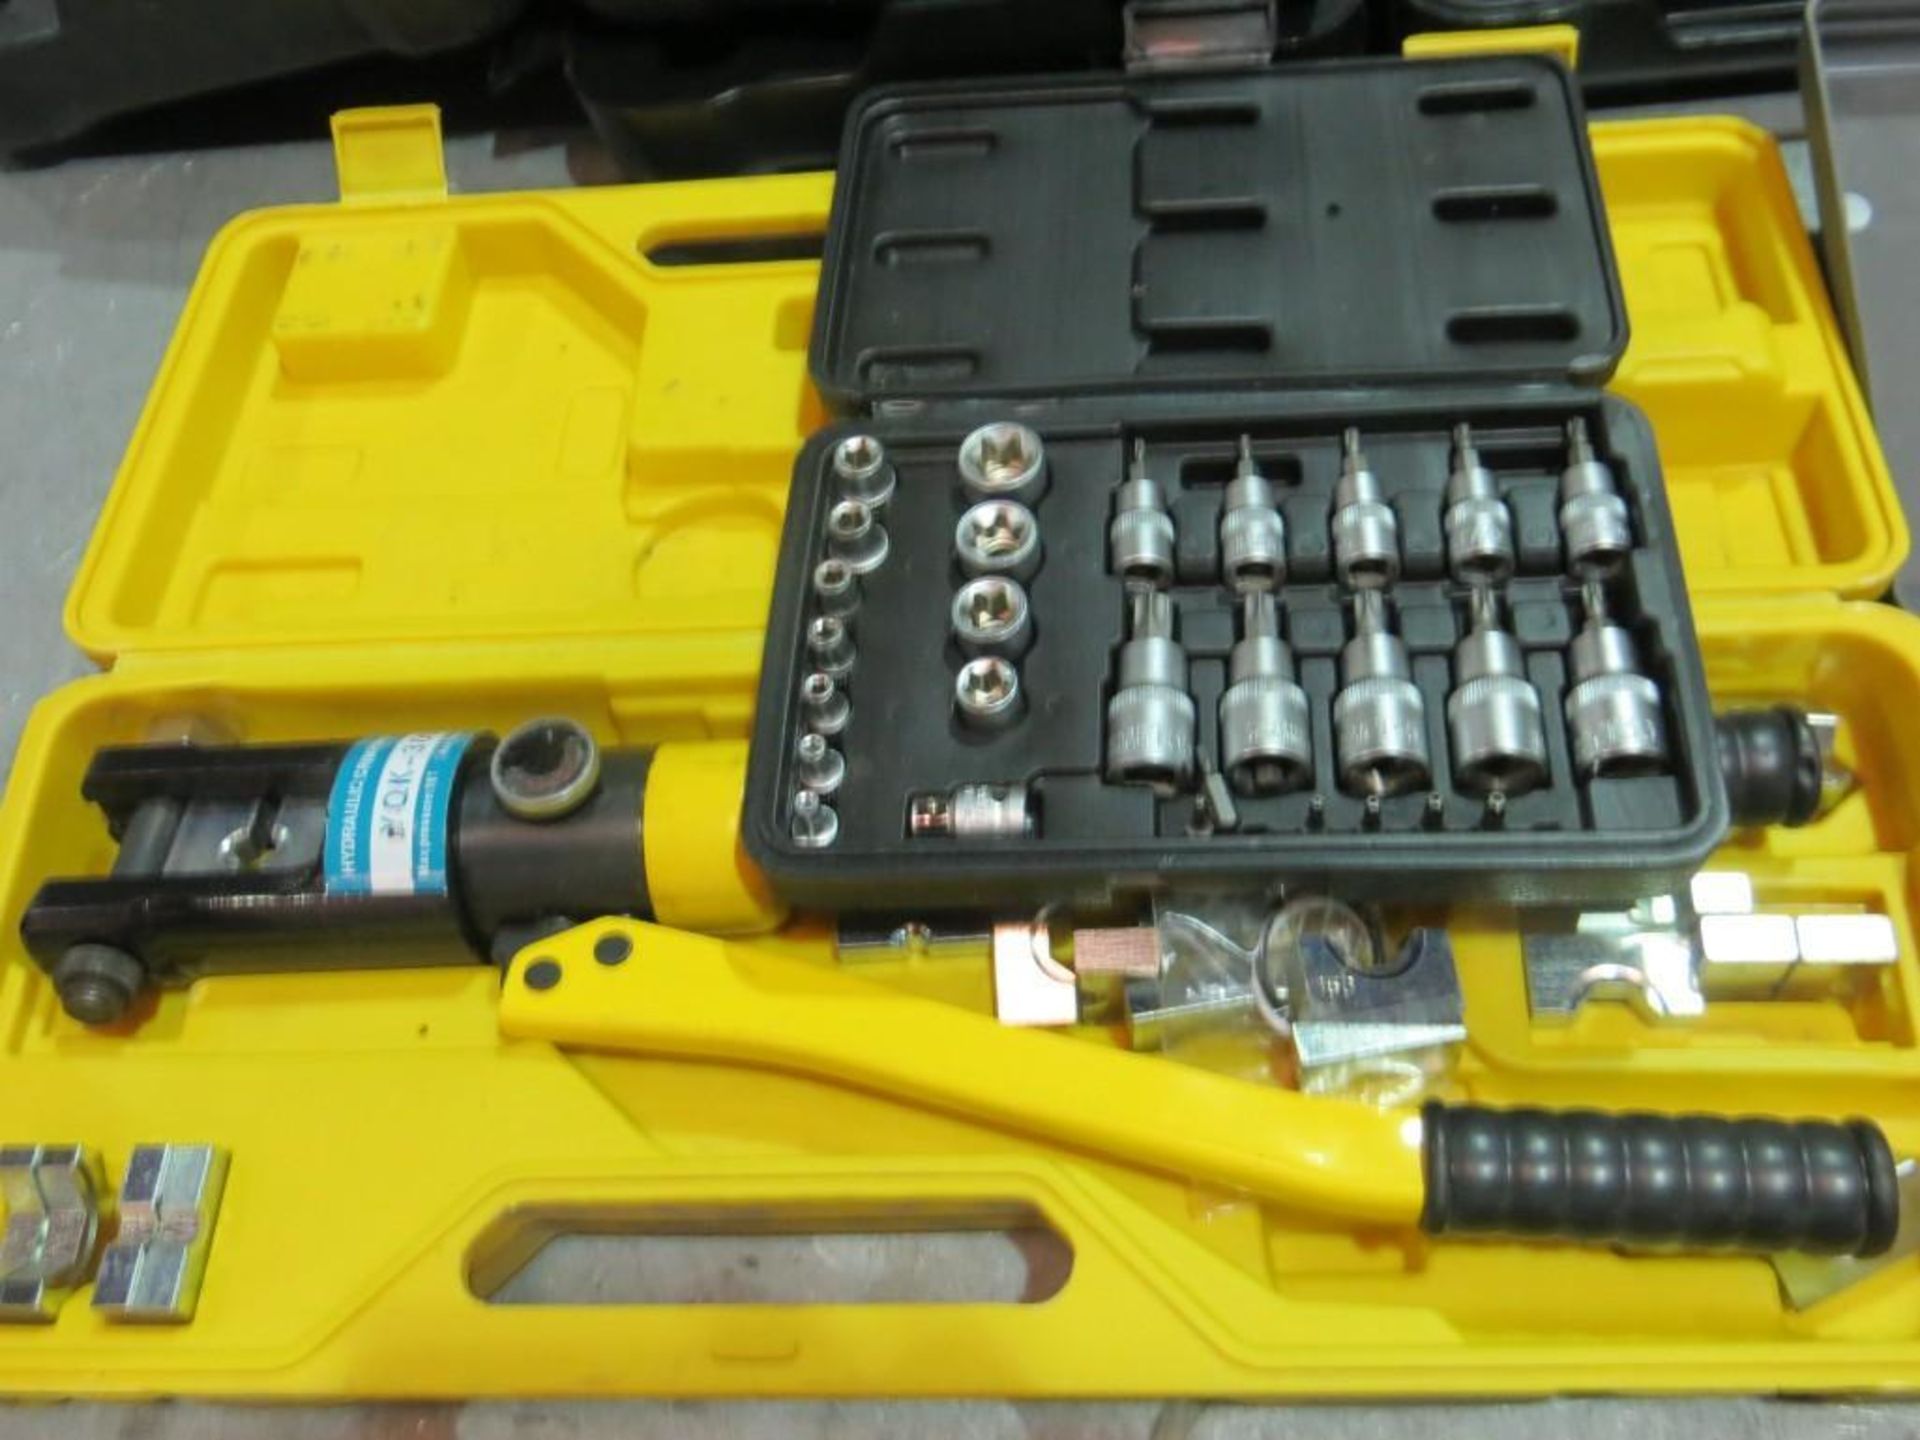 Sku hydraulic crimping tool 16.300 sq mm² - Image 3 of 3